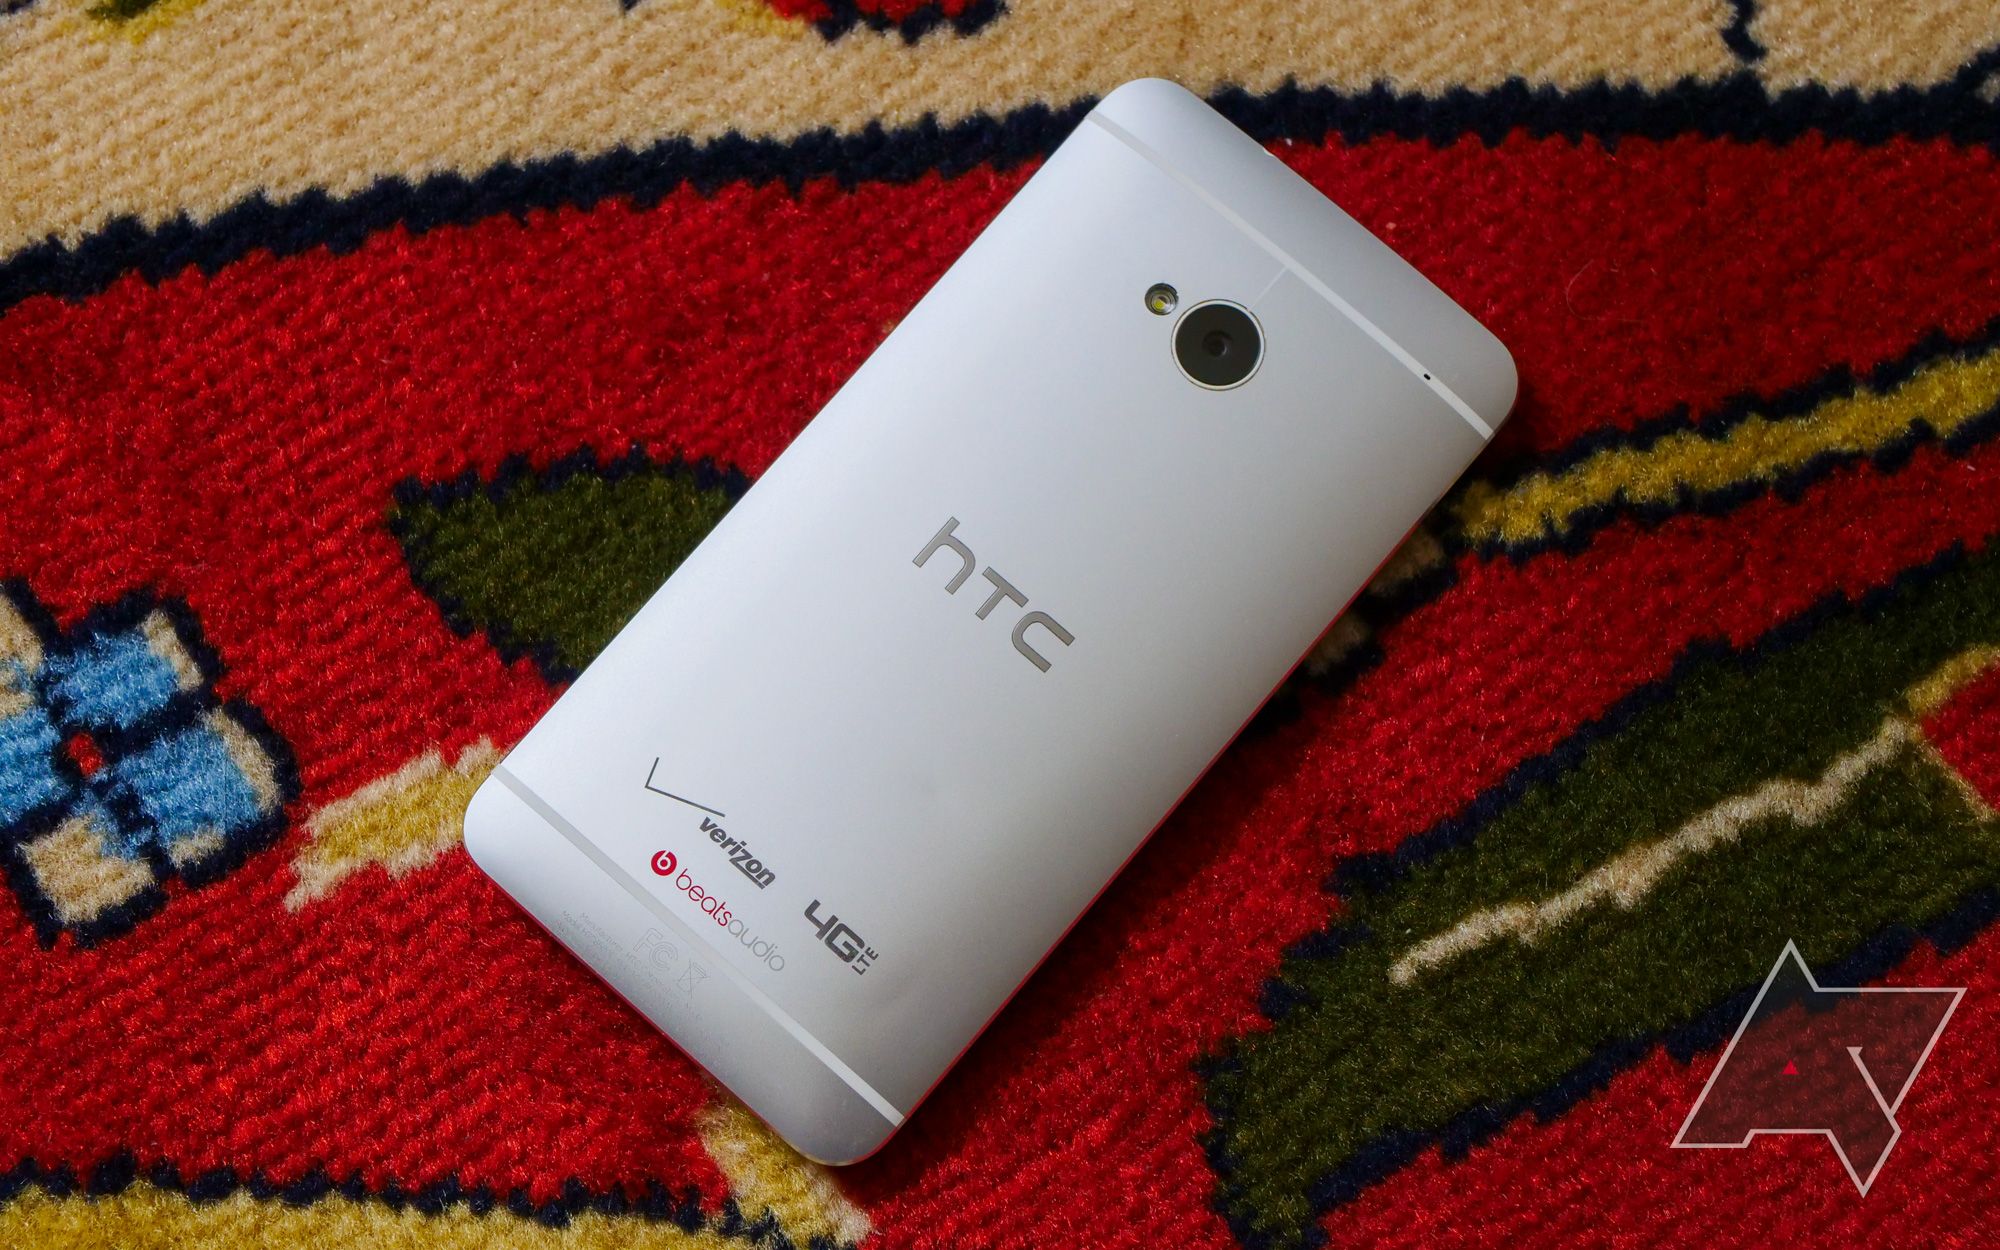 HTC is still making phones?